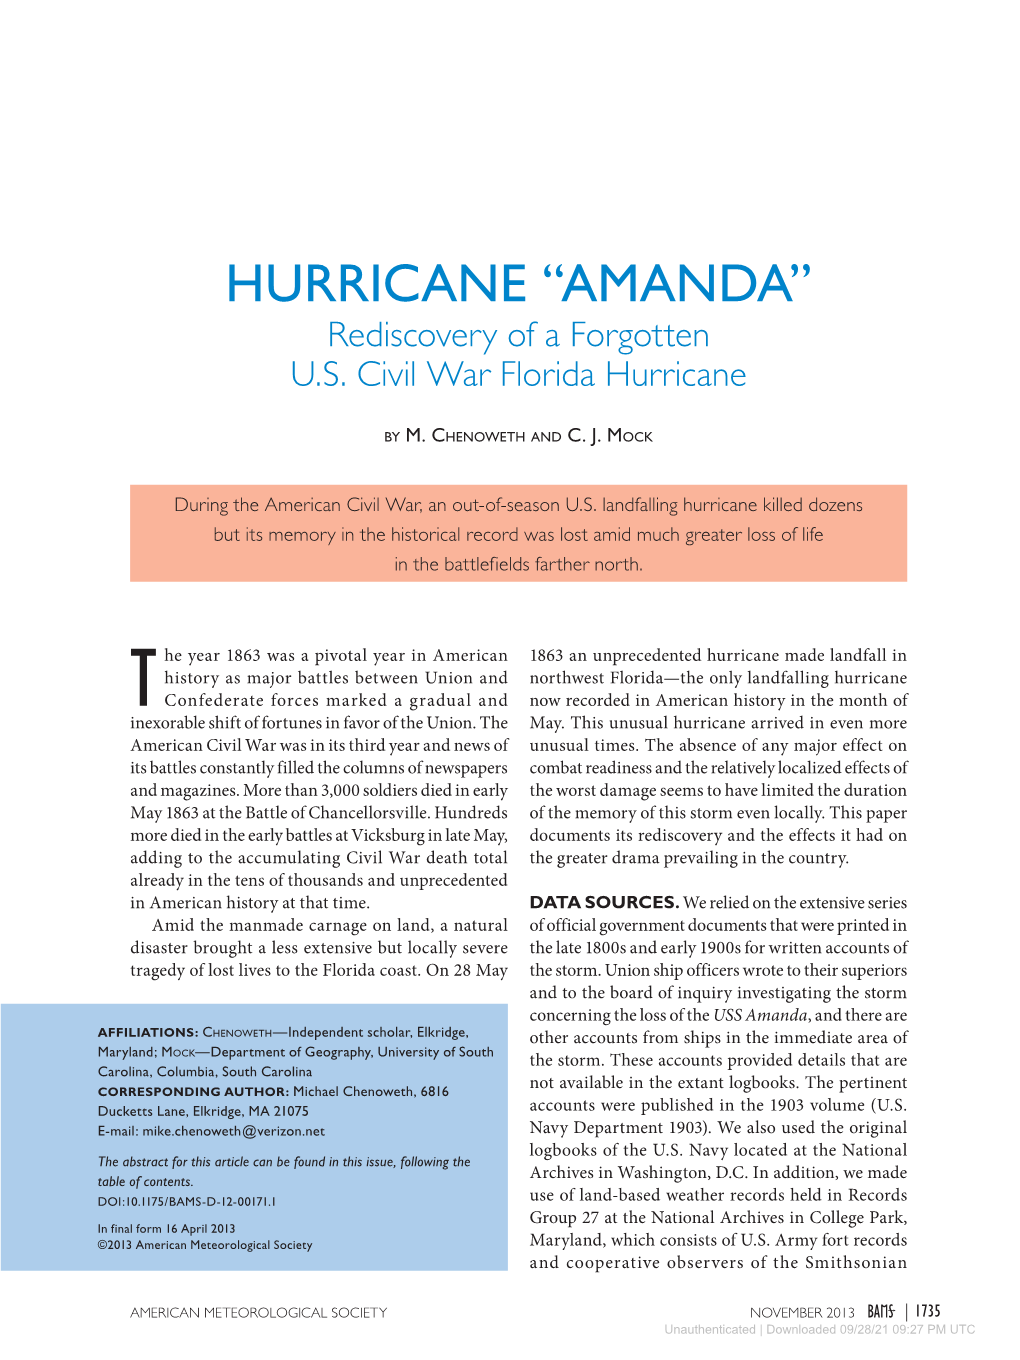 Hurricane “Amanda” Rediscovery of a Forgotten U.S